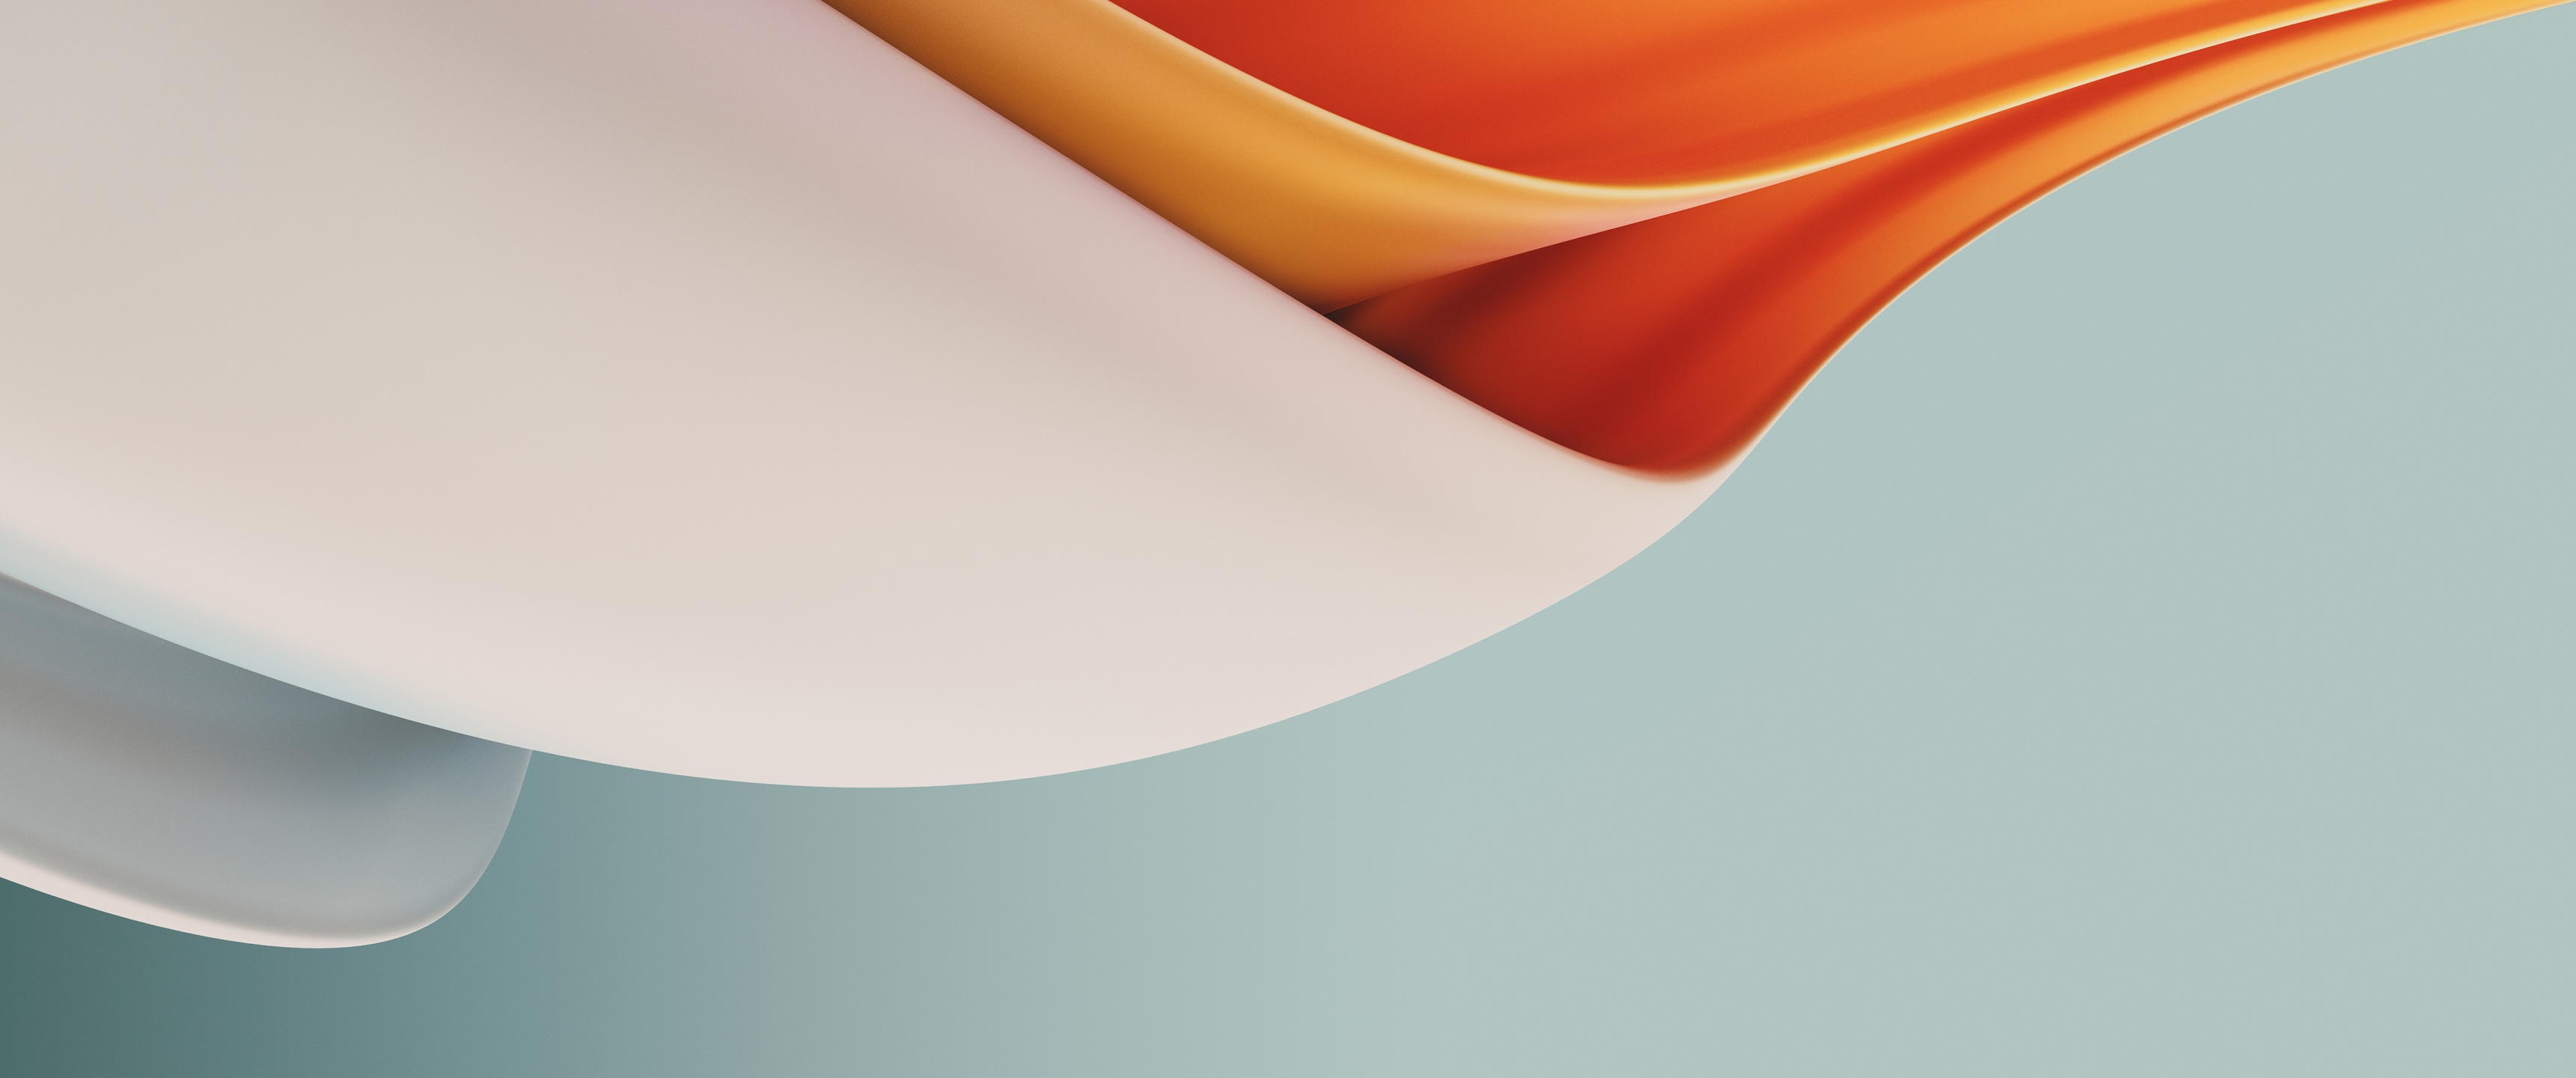 Waves Wallpaper 4K, Fluidic, Orange, Abstract, #3799